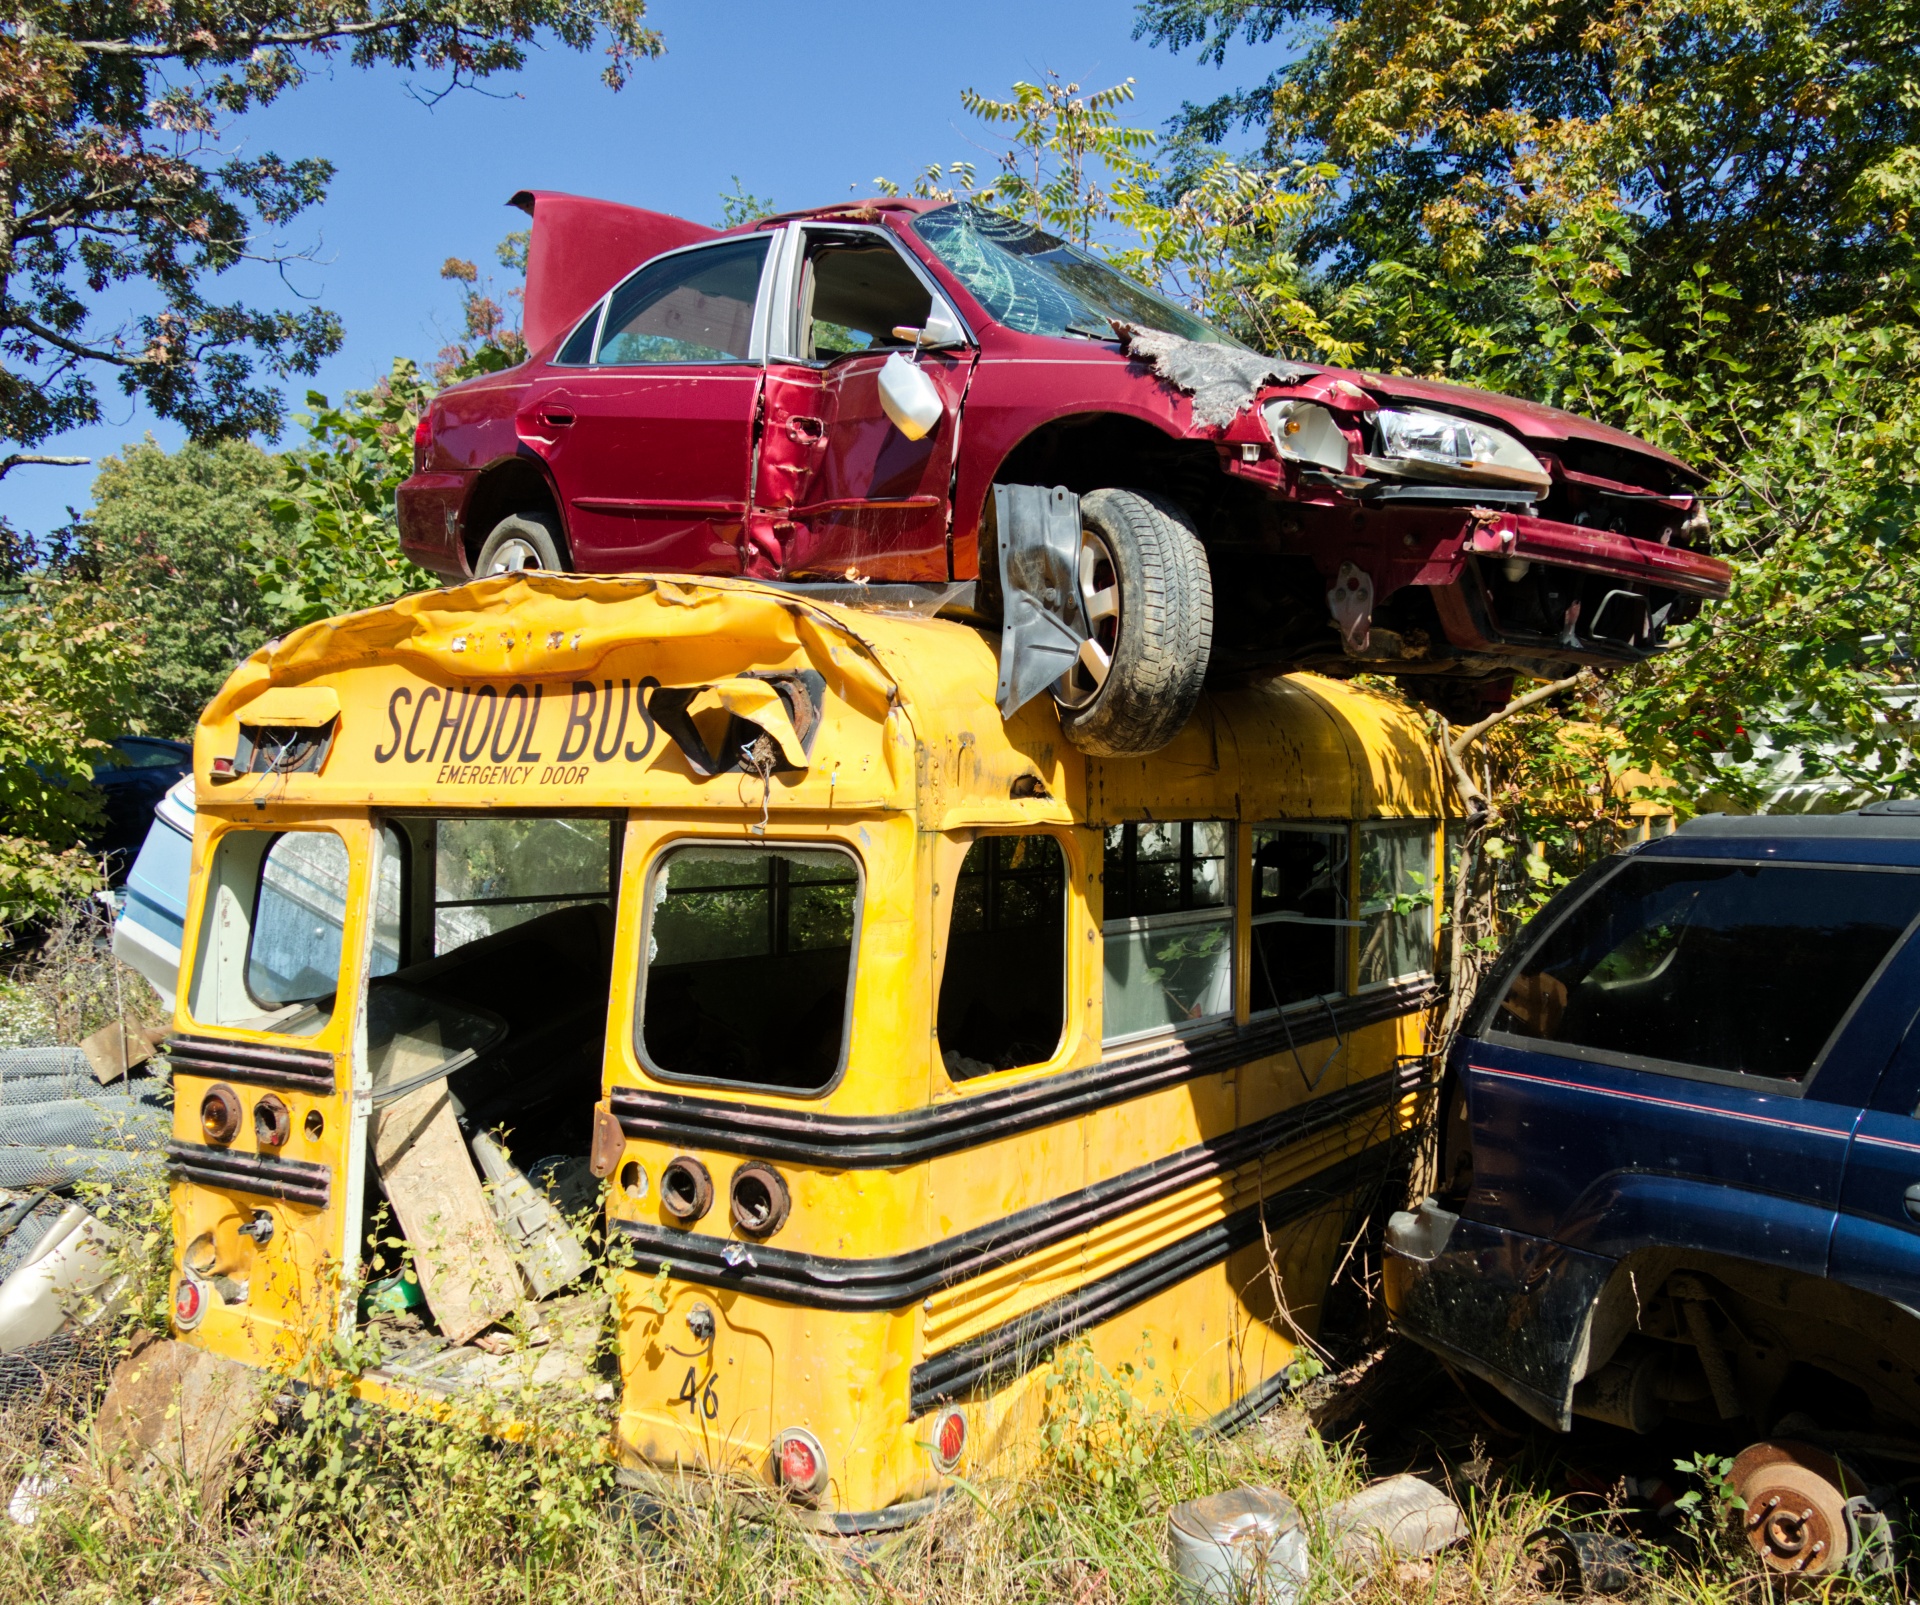 School Bus Crash